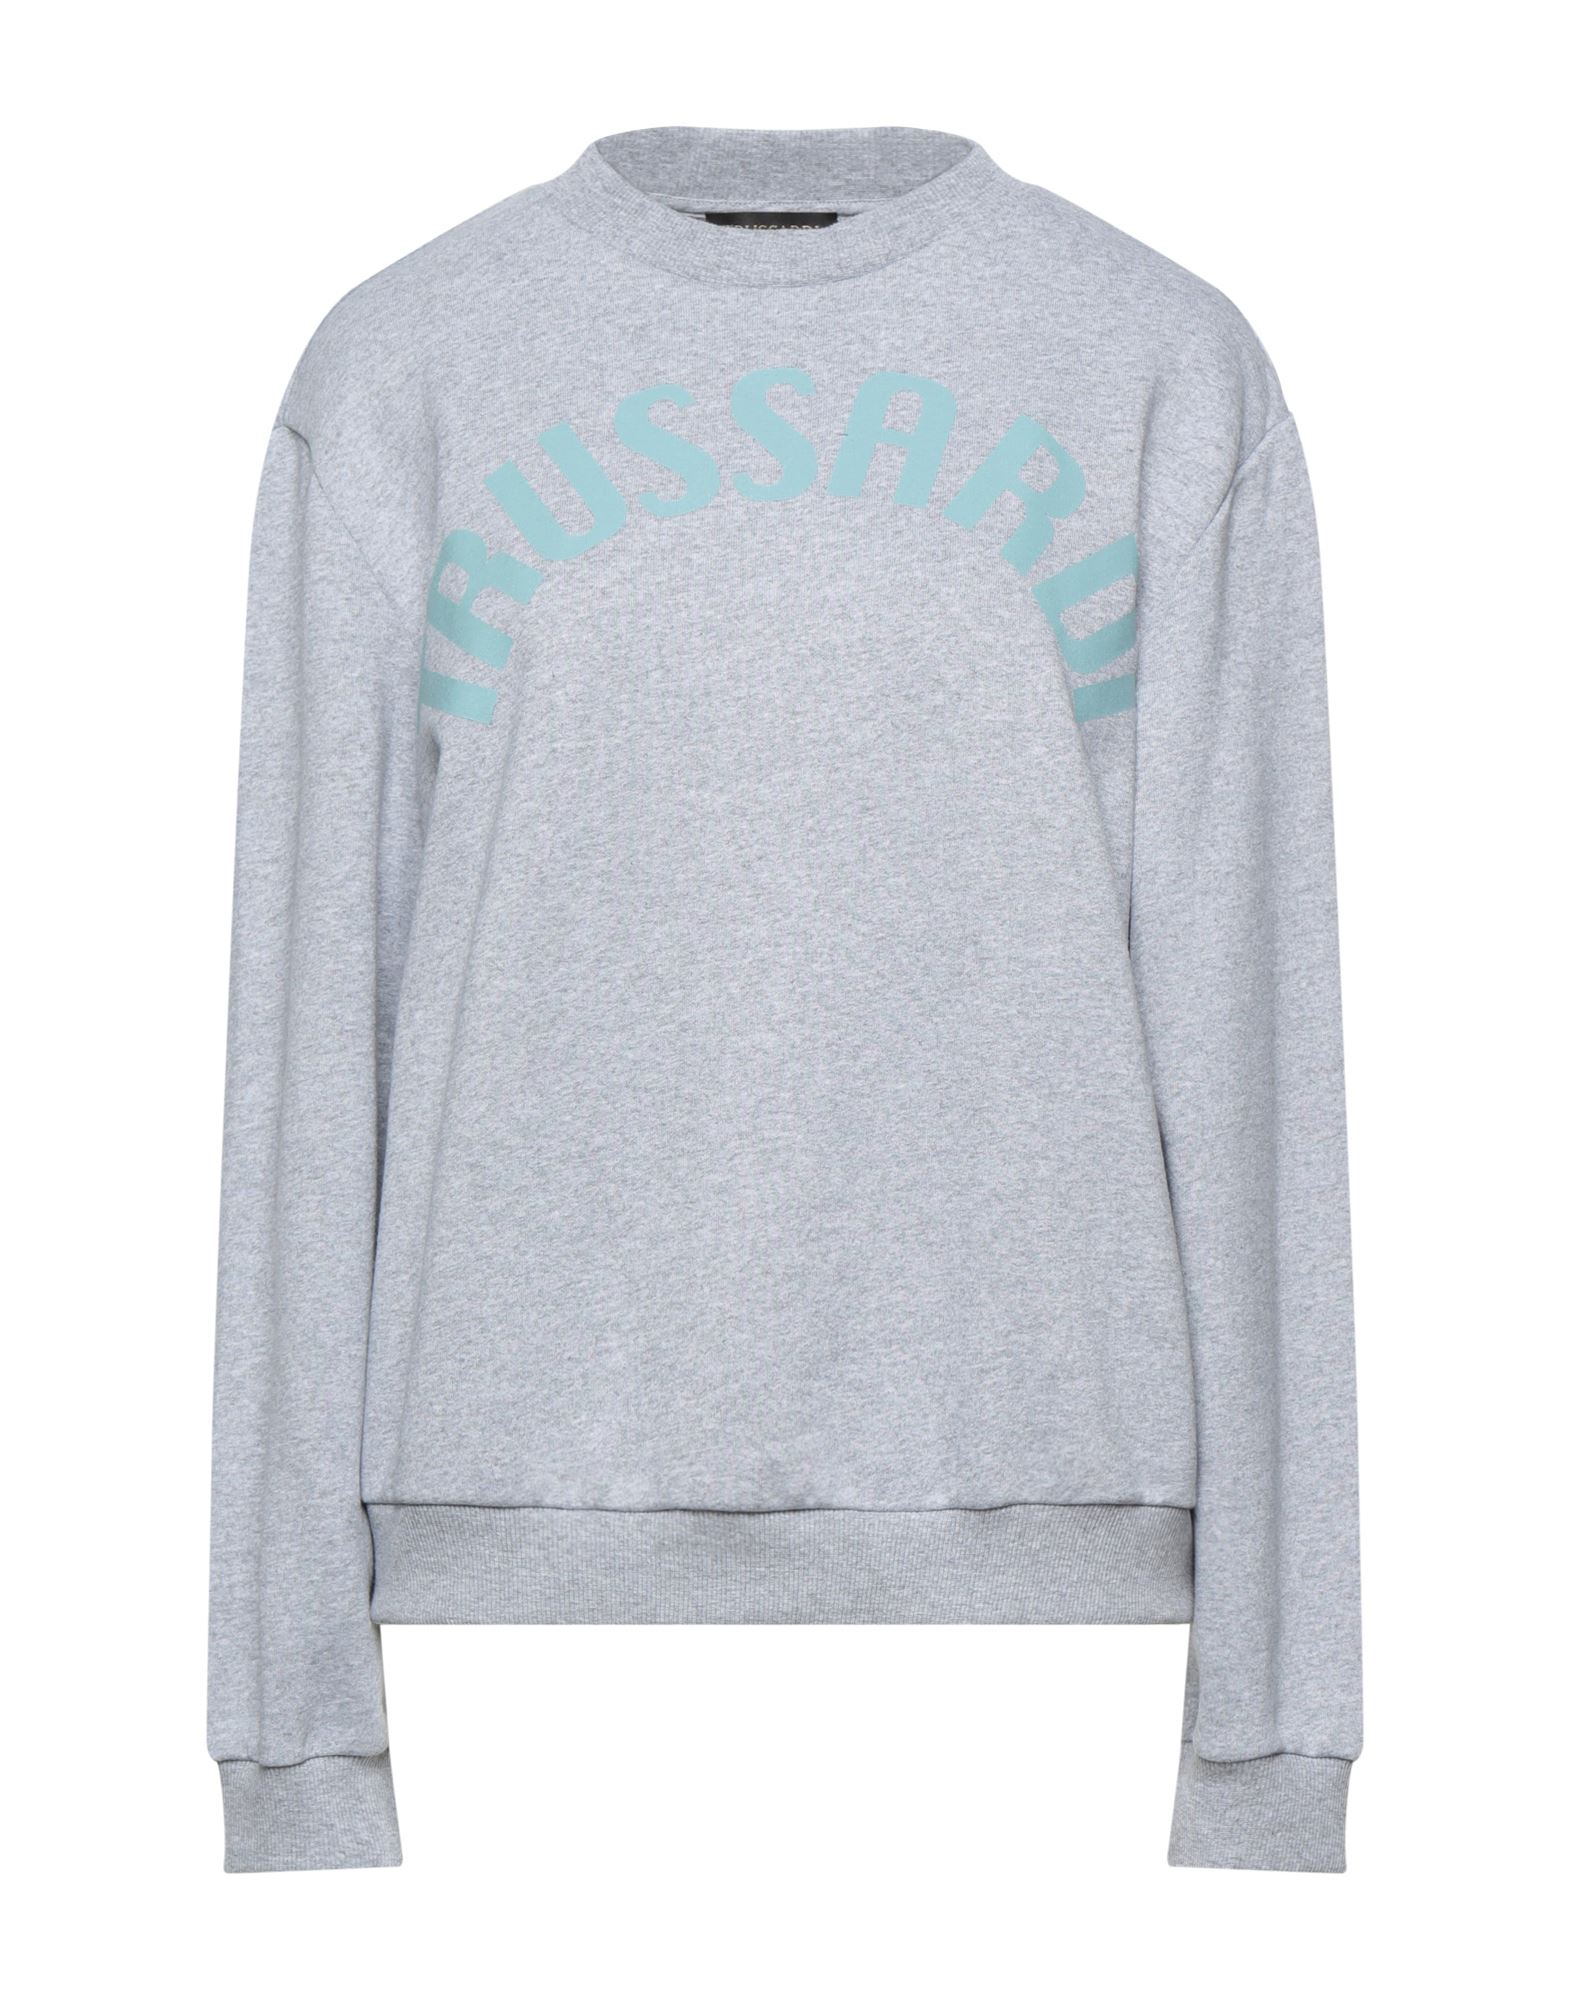 Trussardi Sweatshirts In Grey